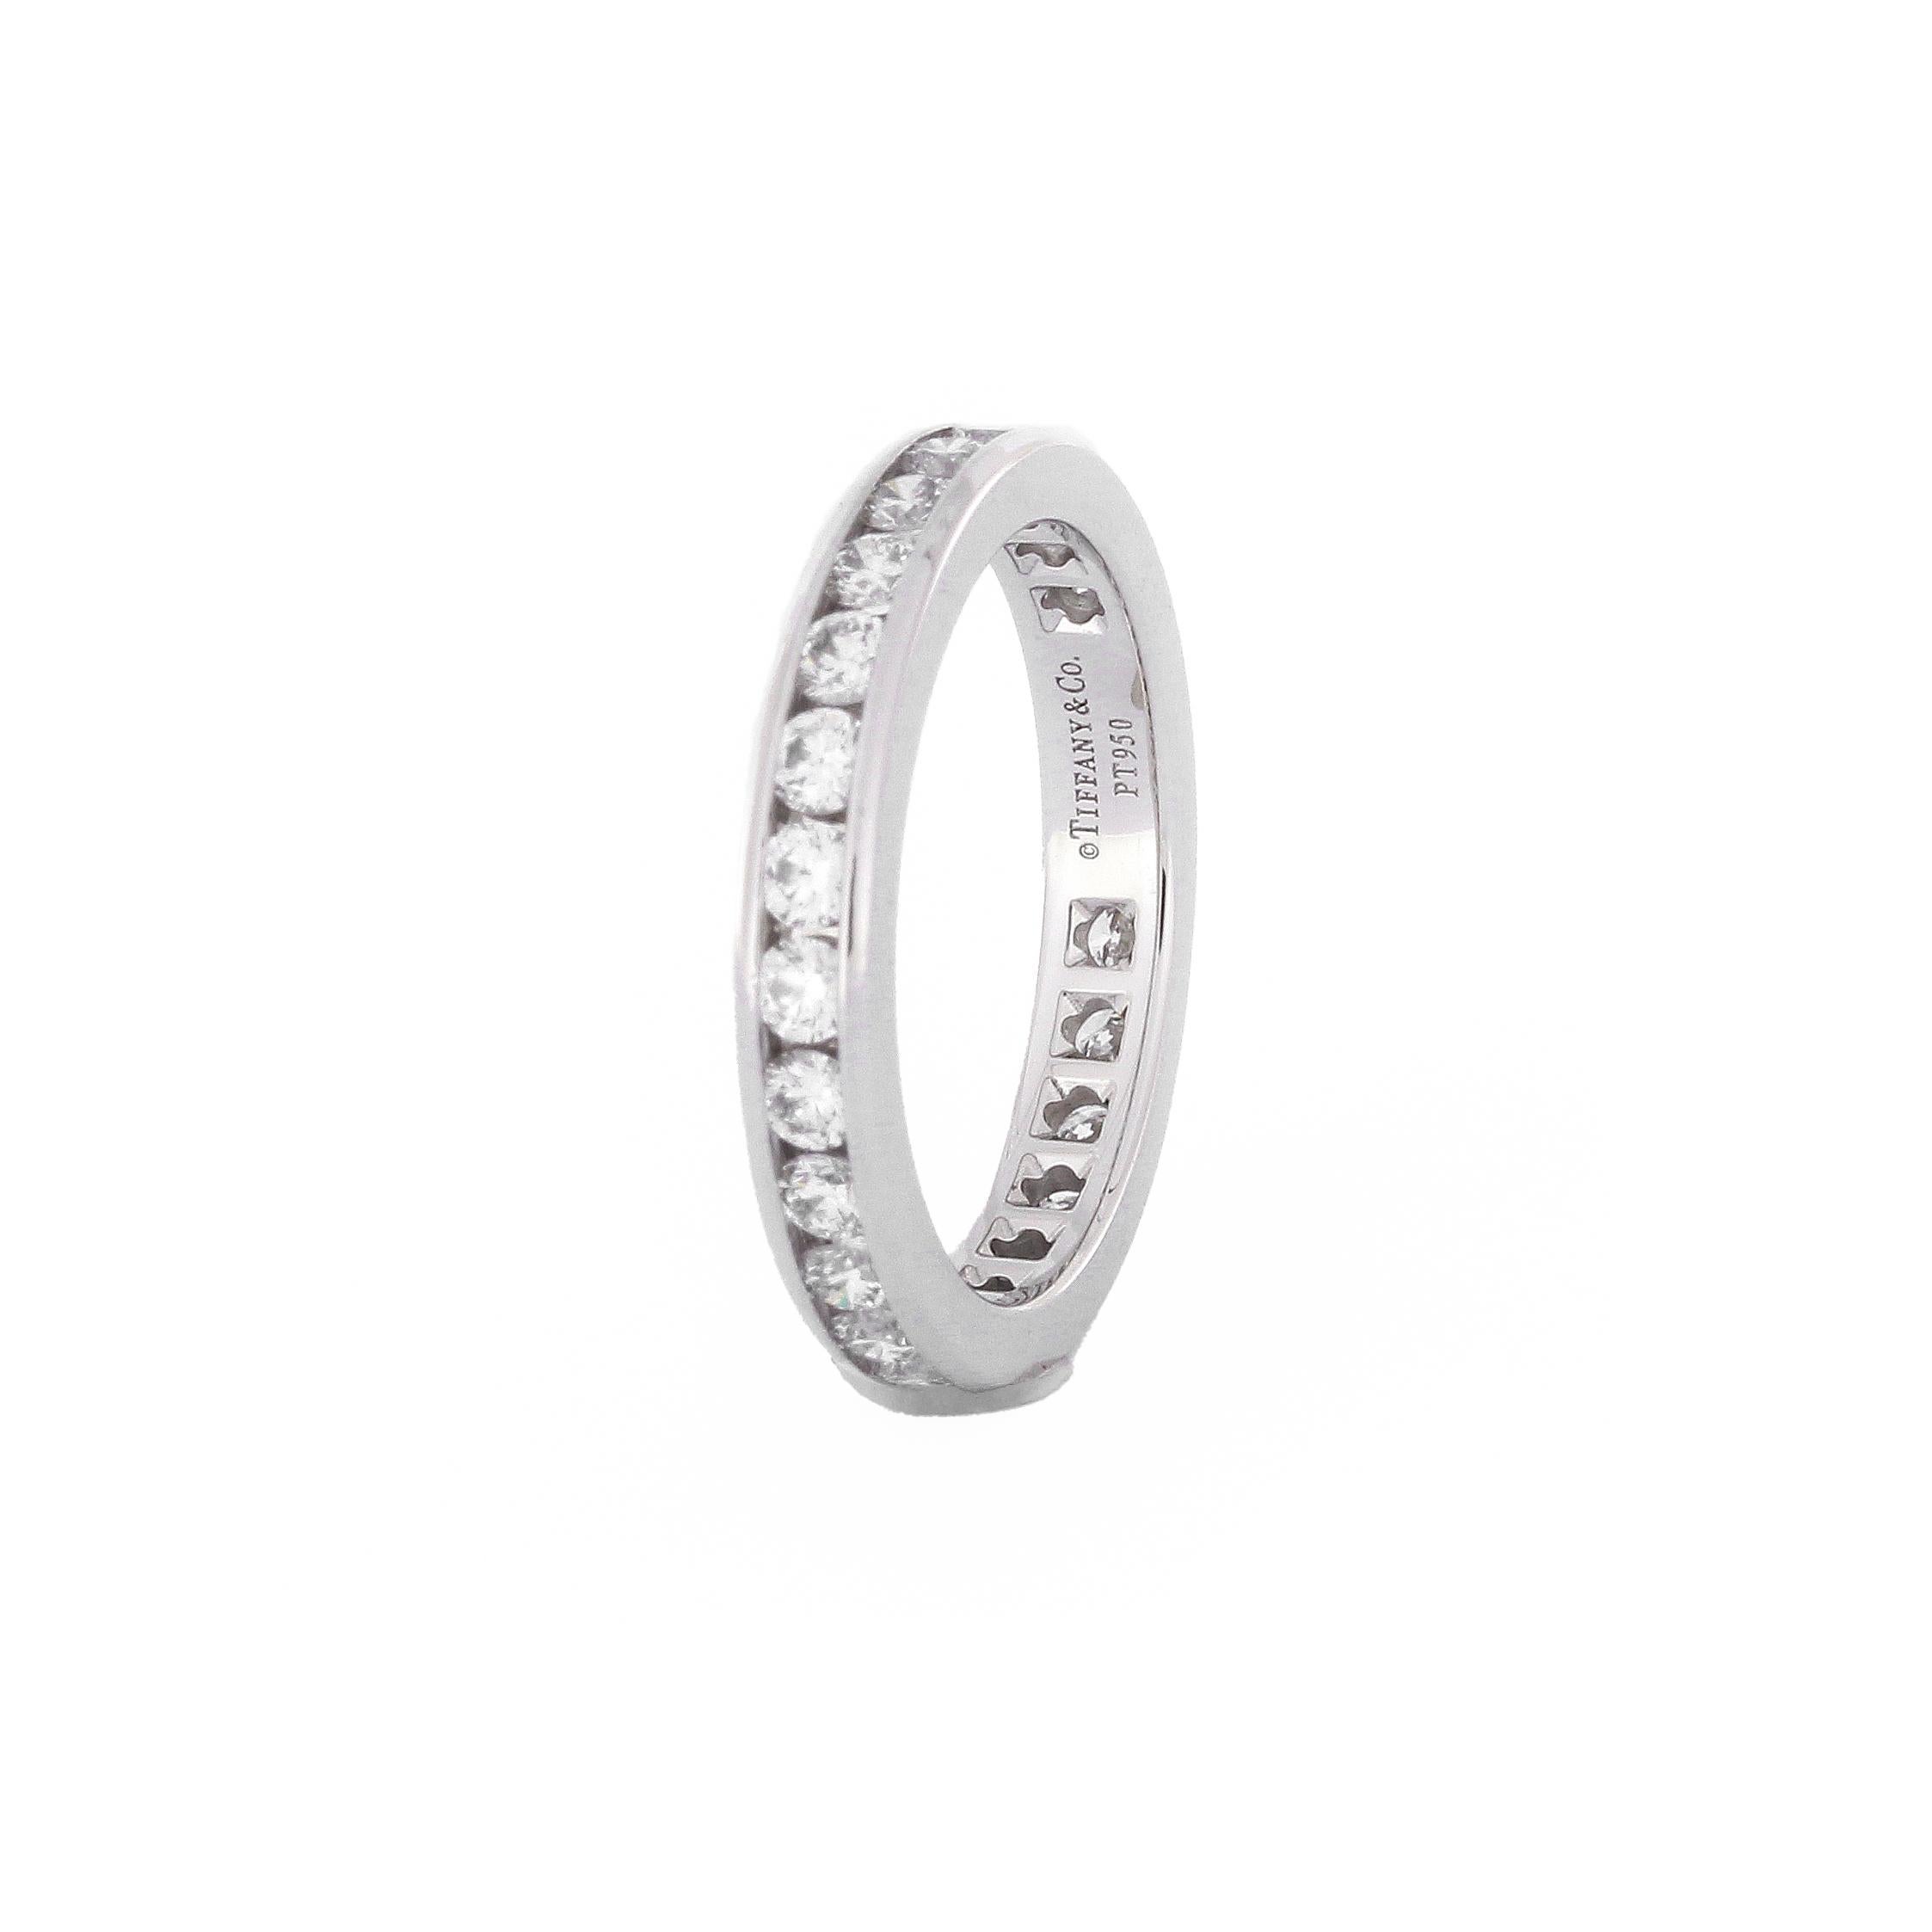 1.0 Carat Diamond Platinum Tiffany Eternity Band Bridal Ring with 26 Brilliant Cut Diamonds. Size 50